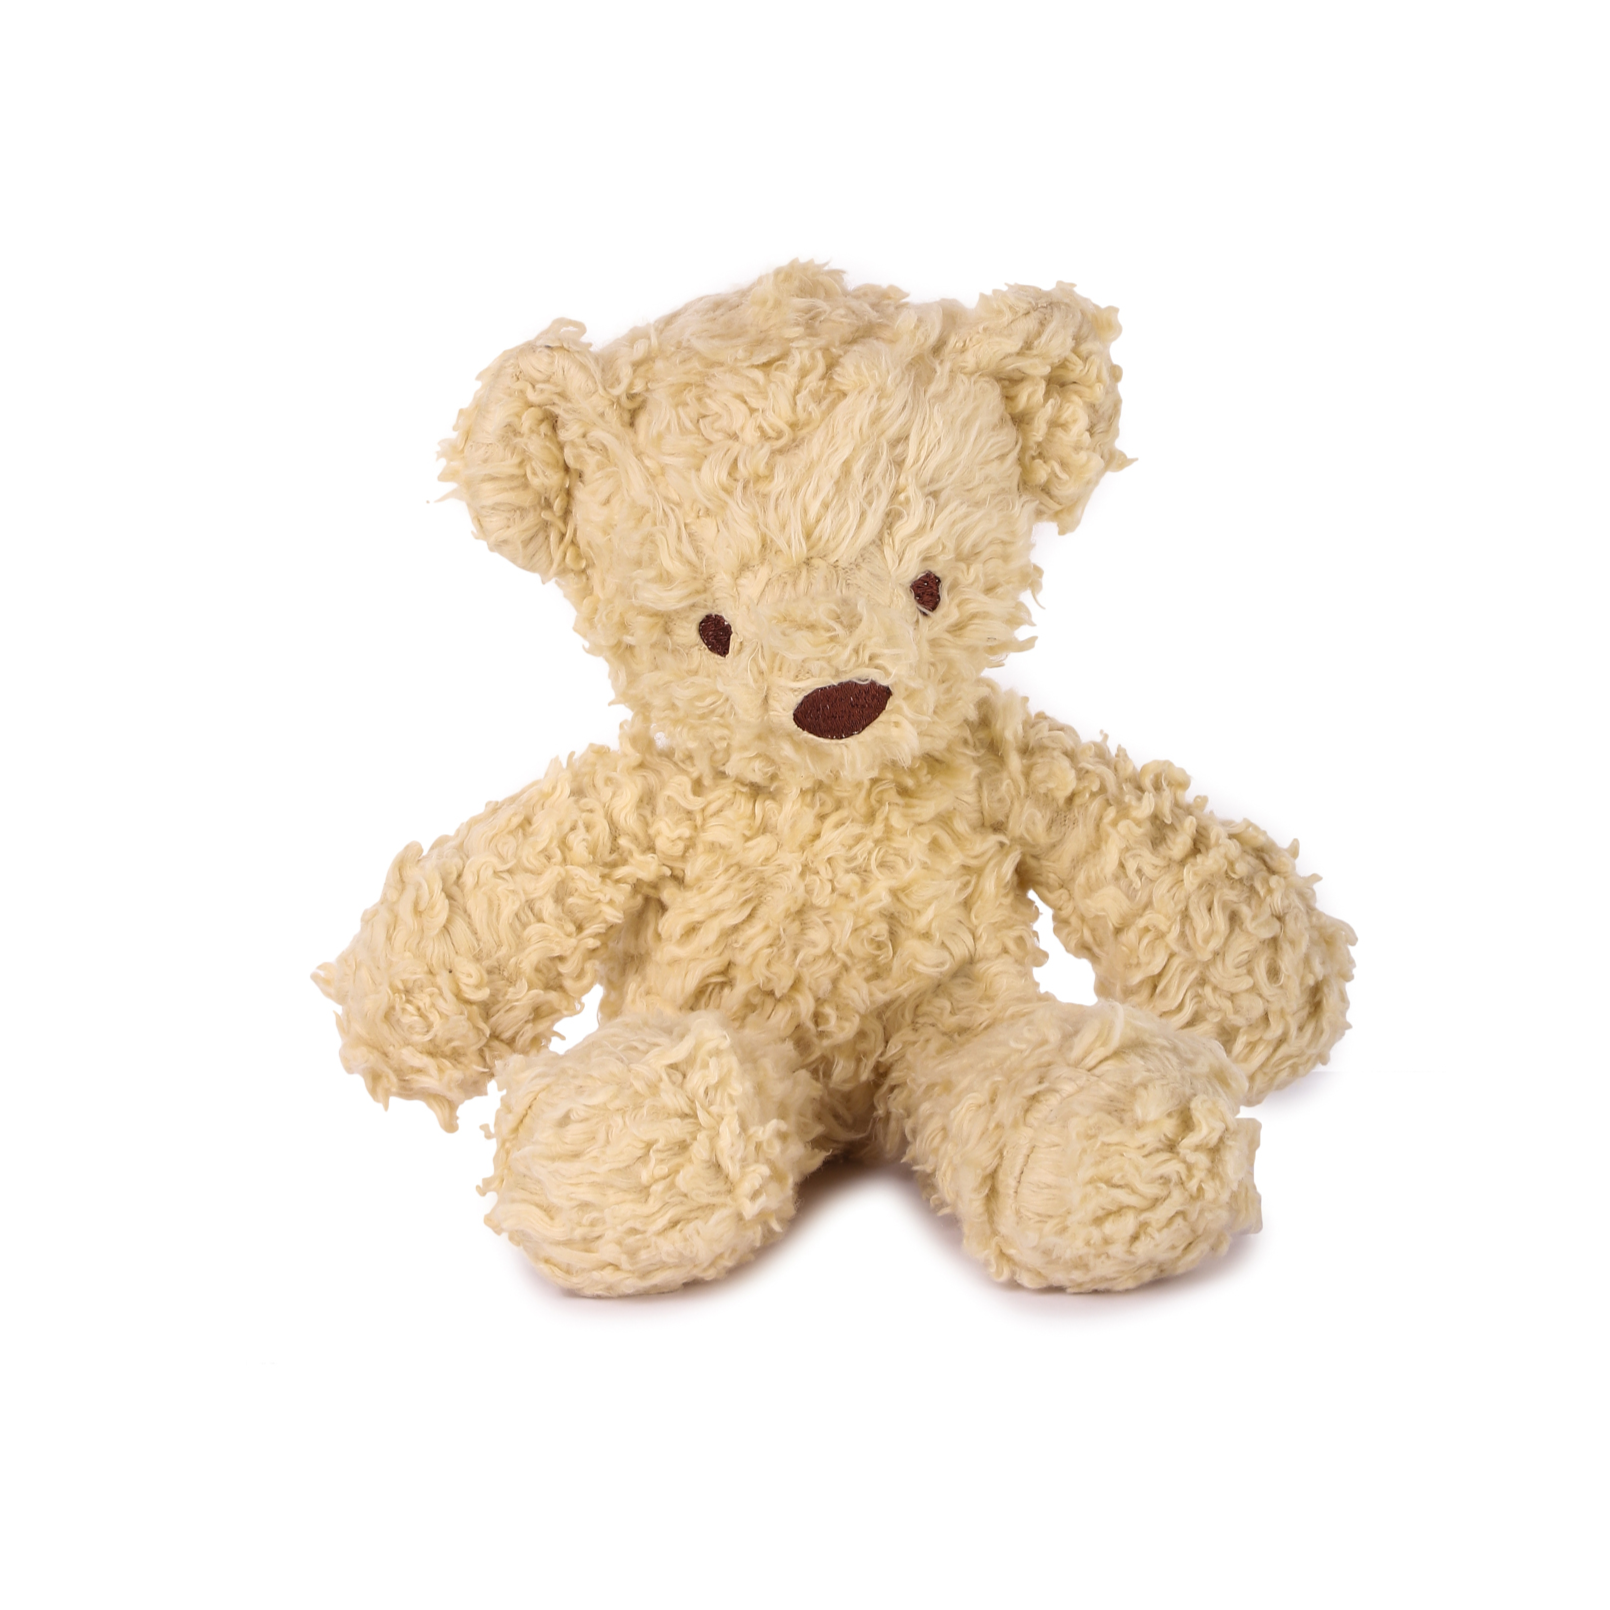 Cream Teddy Bear | Herbal Dye Teddy Bear 10" | Baby Teddy Bear Toy – Bears for Humanity